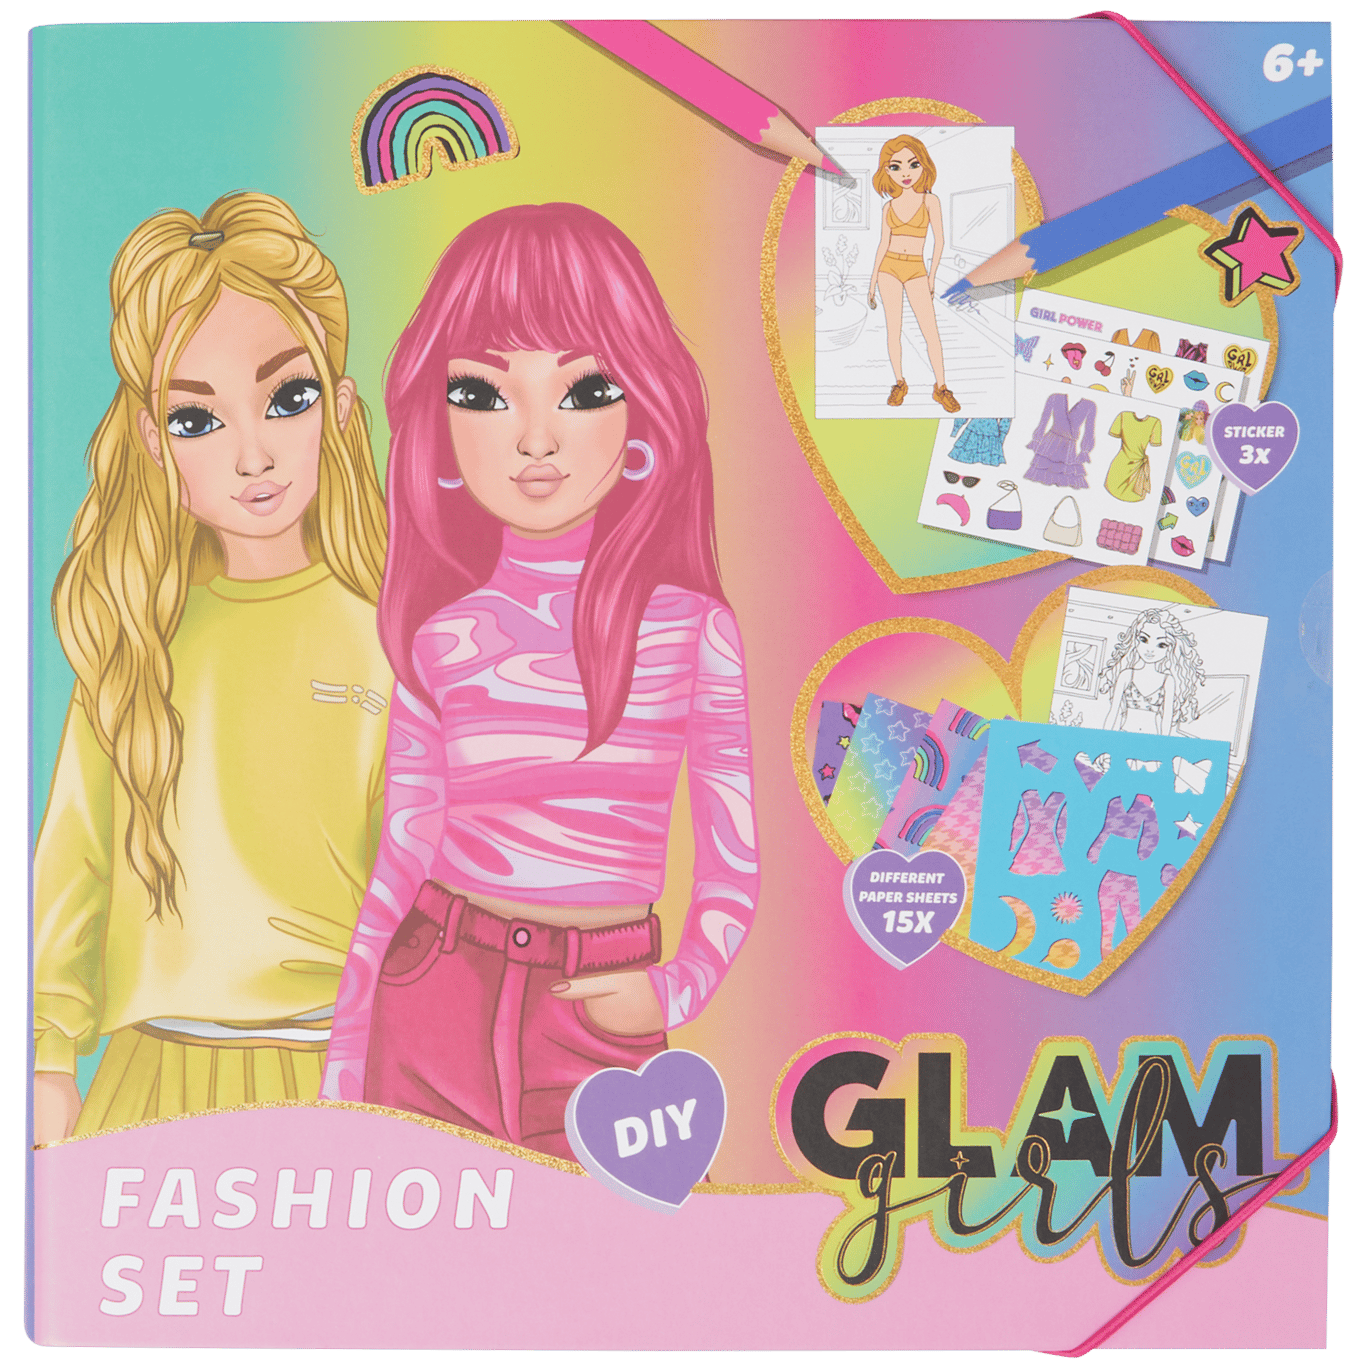 Glam Girls mode activiteitenboek